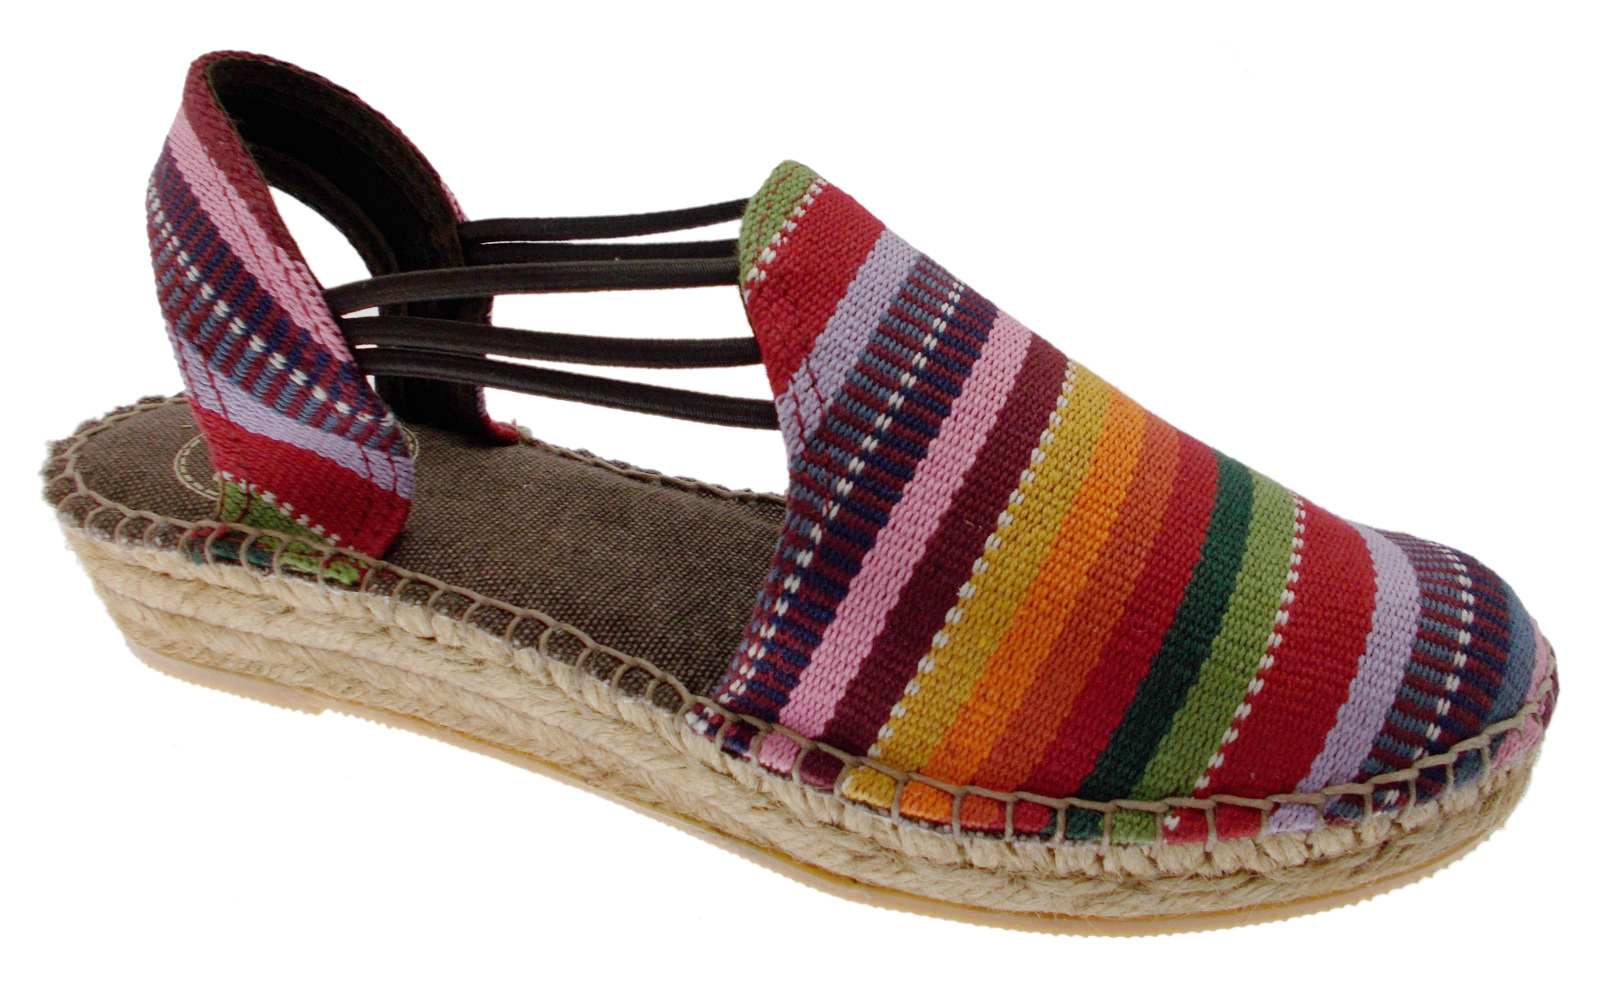 NORMA NORD rainbow multicolor rope sandal espadrilles Toni Pons | eBay